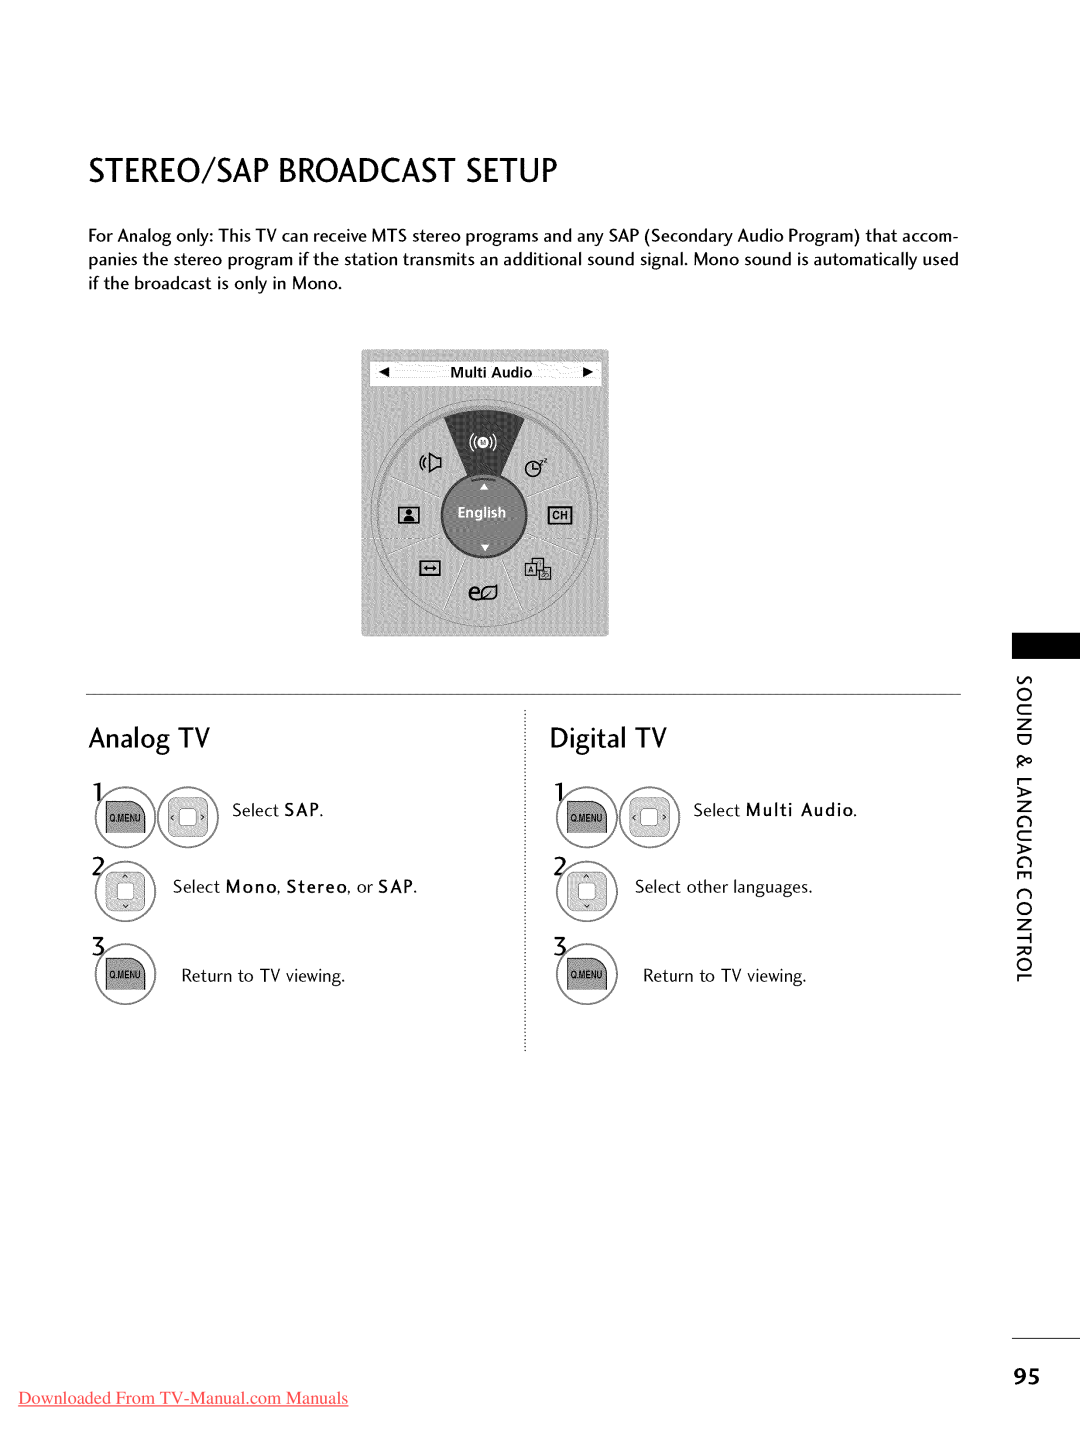 LG Electronics 42LD420, 32LD350 Stereo/Sapbroadcastsetup, Analog TV, Digital TV, Downloaded From TV-Manual.com Manuals 